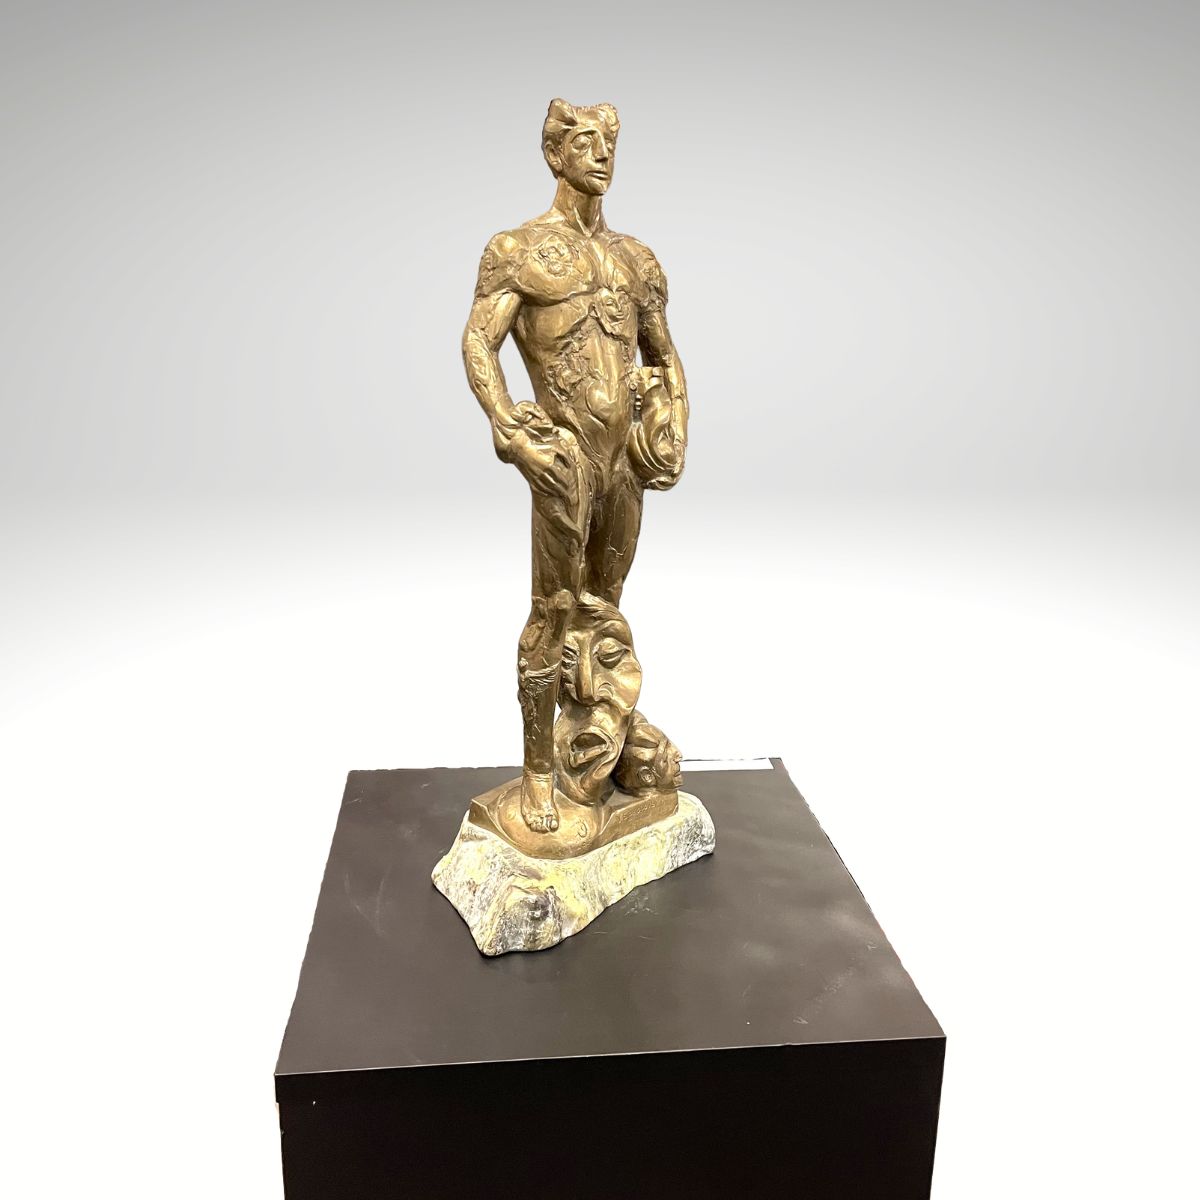 Contemporary Sculpture. Title: Sculpture Allegory, Bronze by Contemporary Canadian artist Valeri Sokolovski.